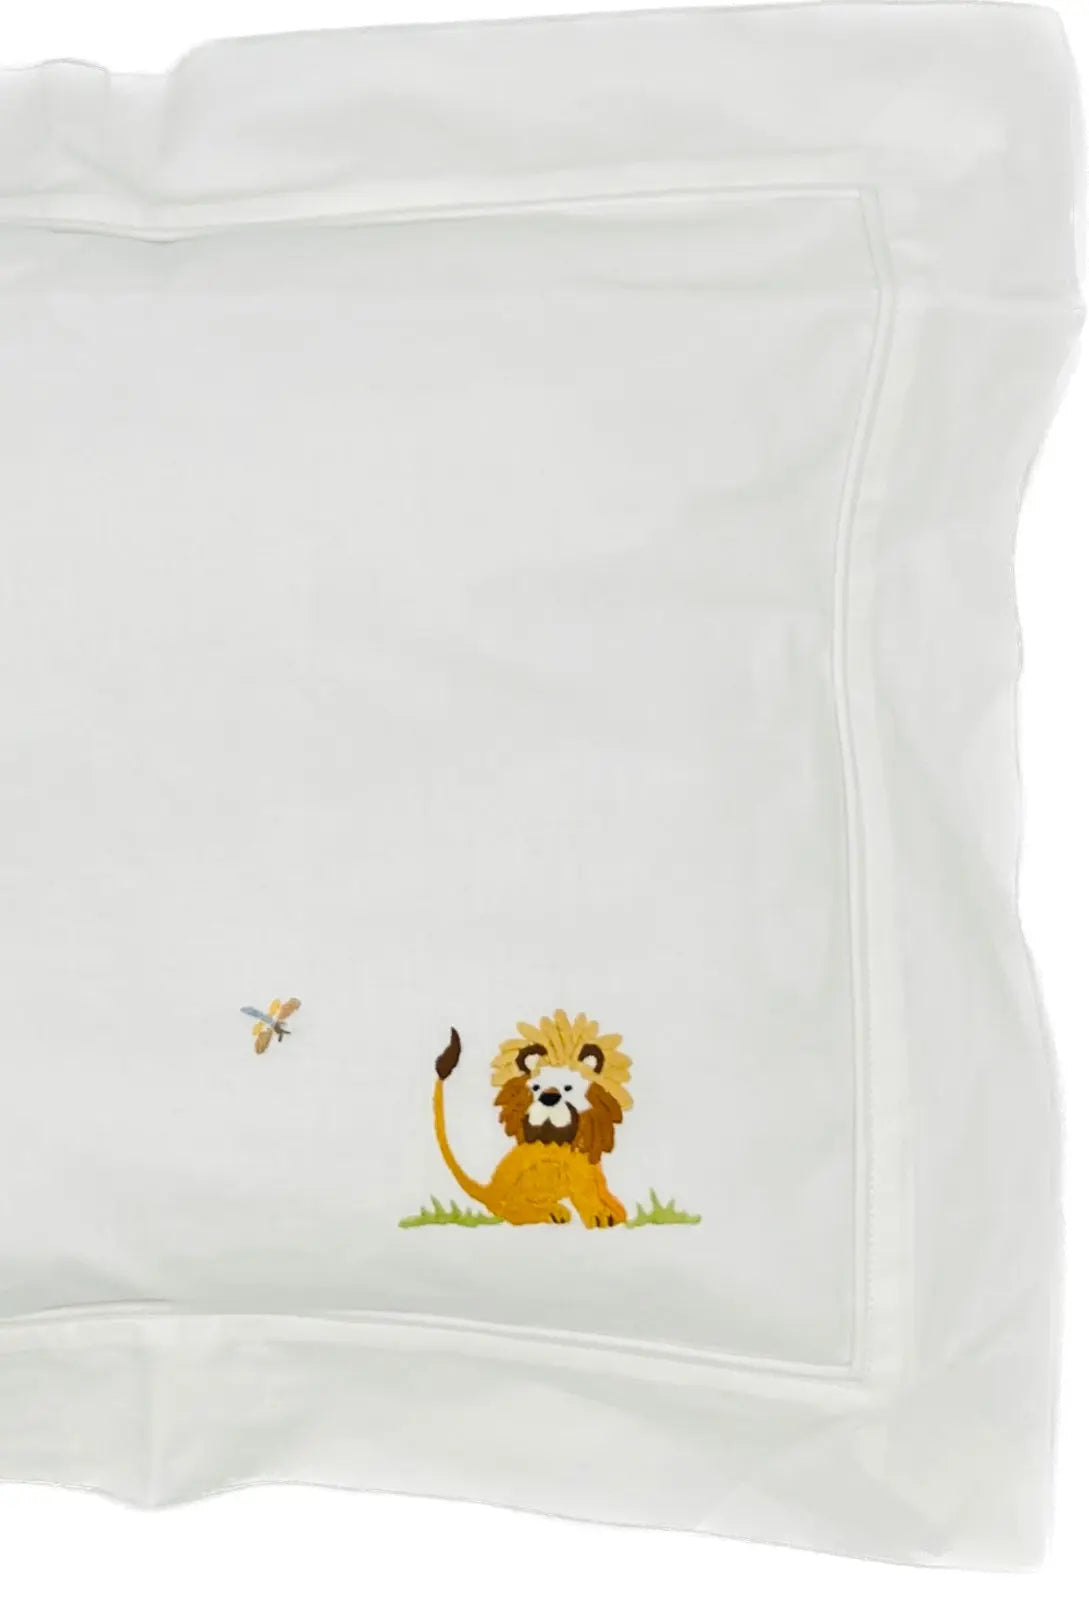 Boudoir pillowcase "safari" white-Towels & bedlinen-Gordonsbury-Blue Almonds-London-South Kensington